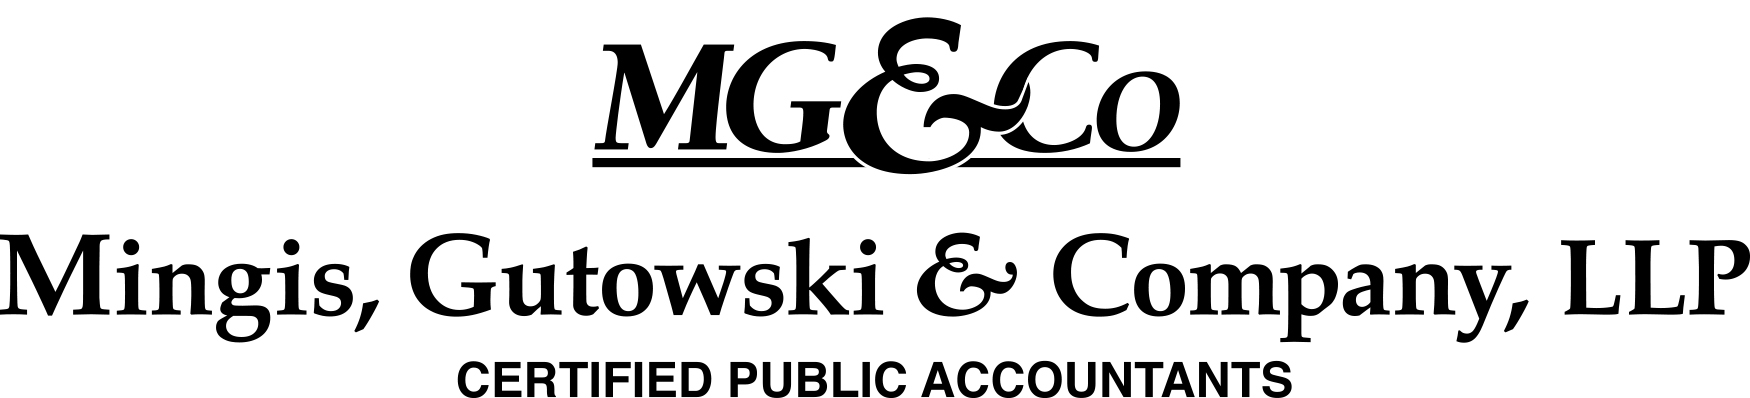 Mingis, Gutowski & Company, LLP